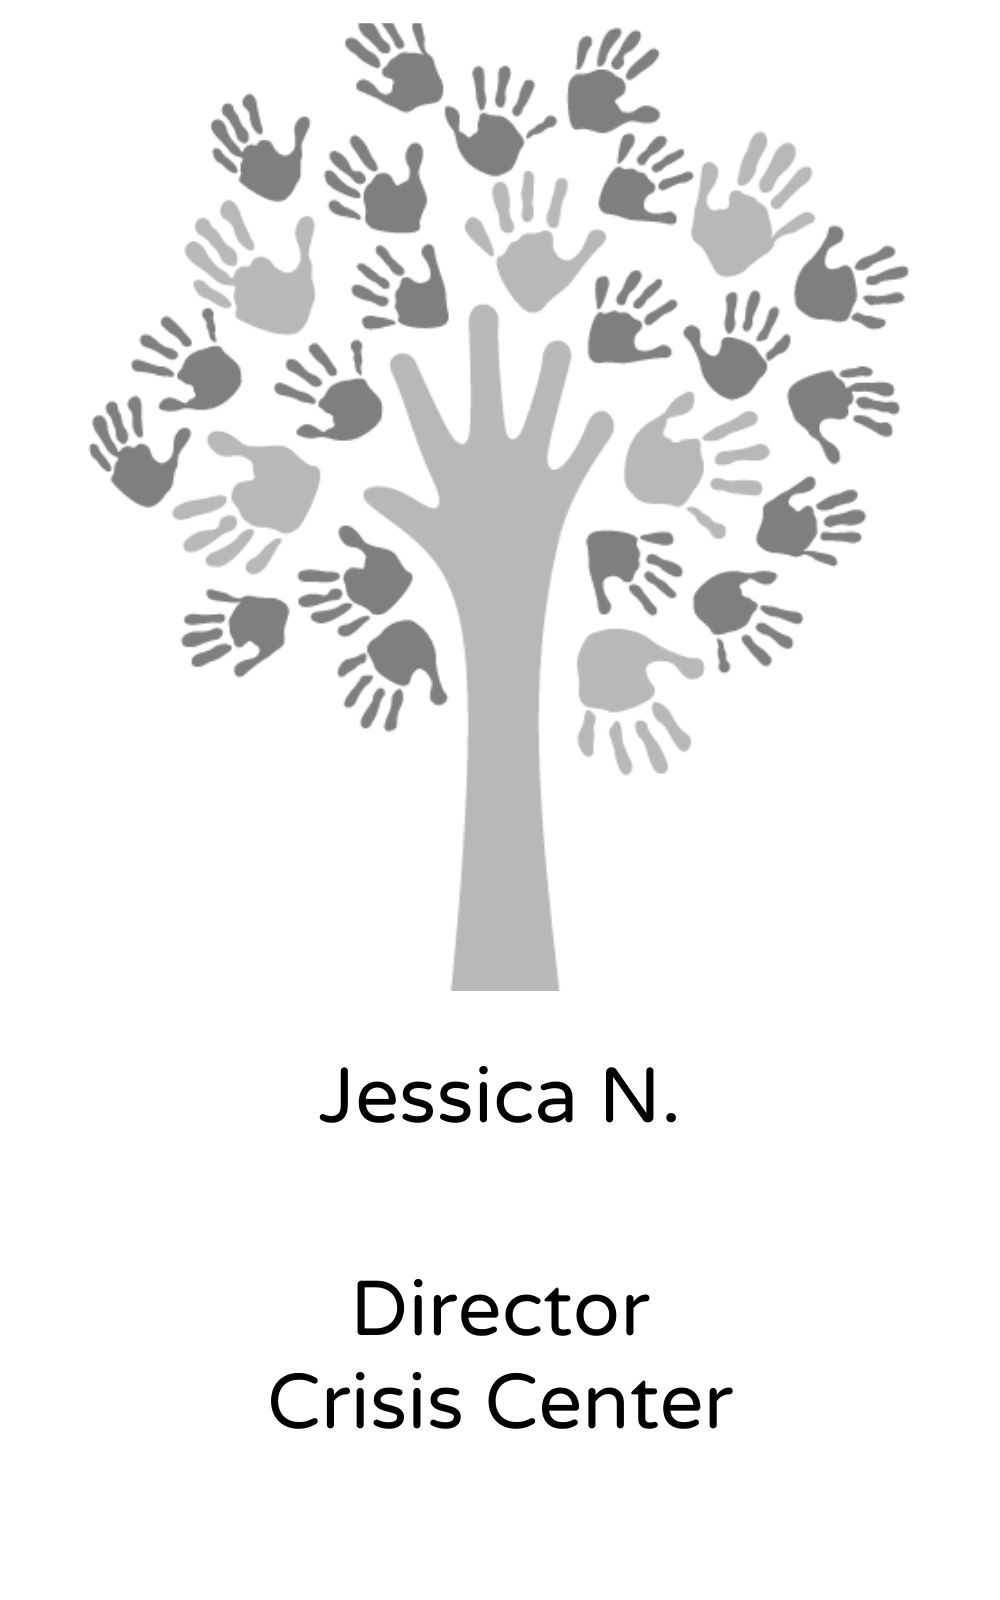 Jessica N, Director, Crisis Center